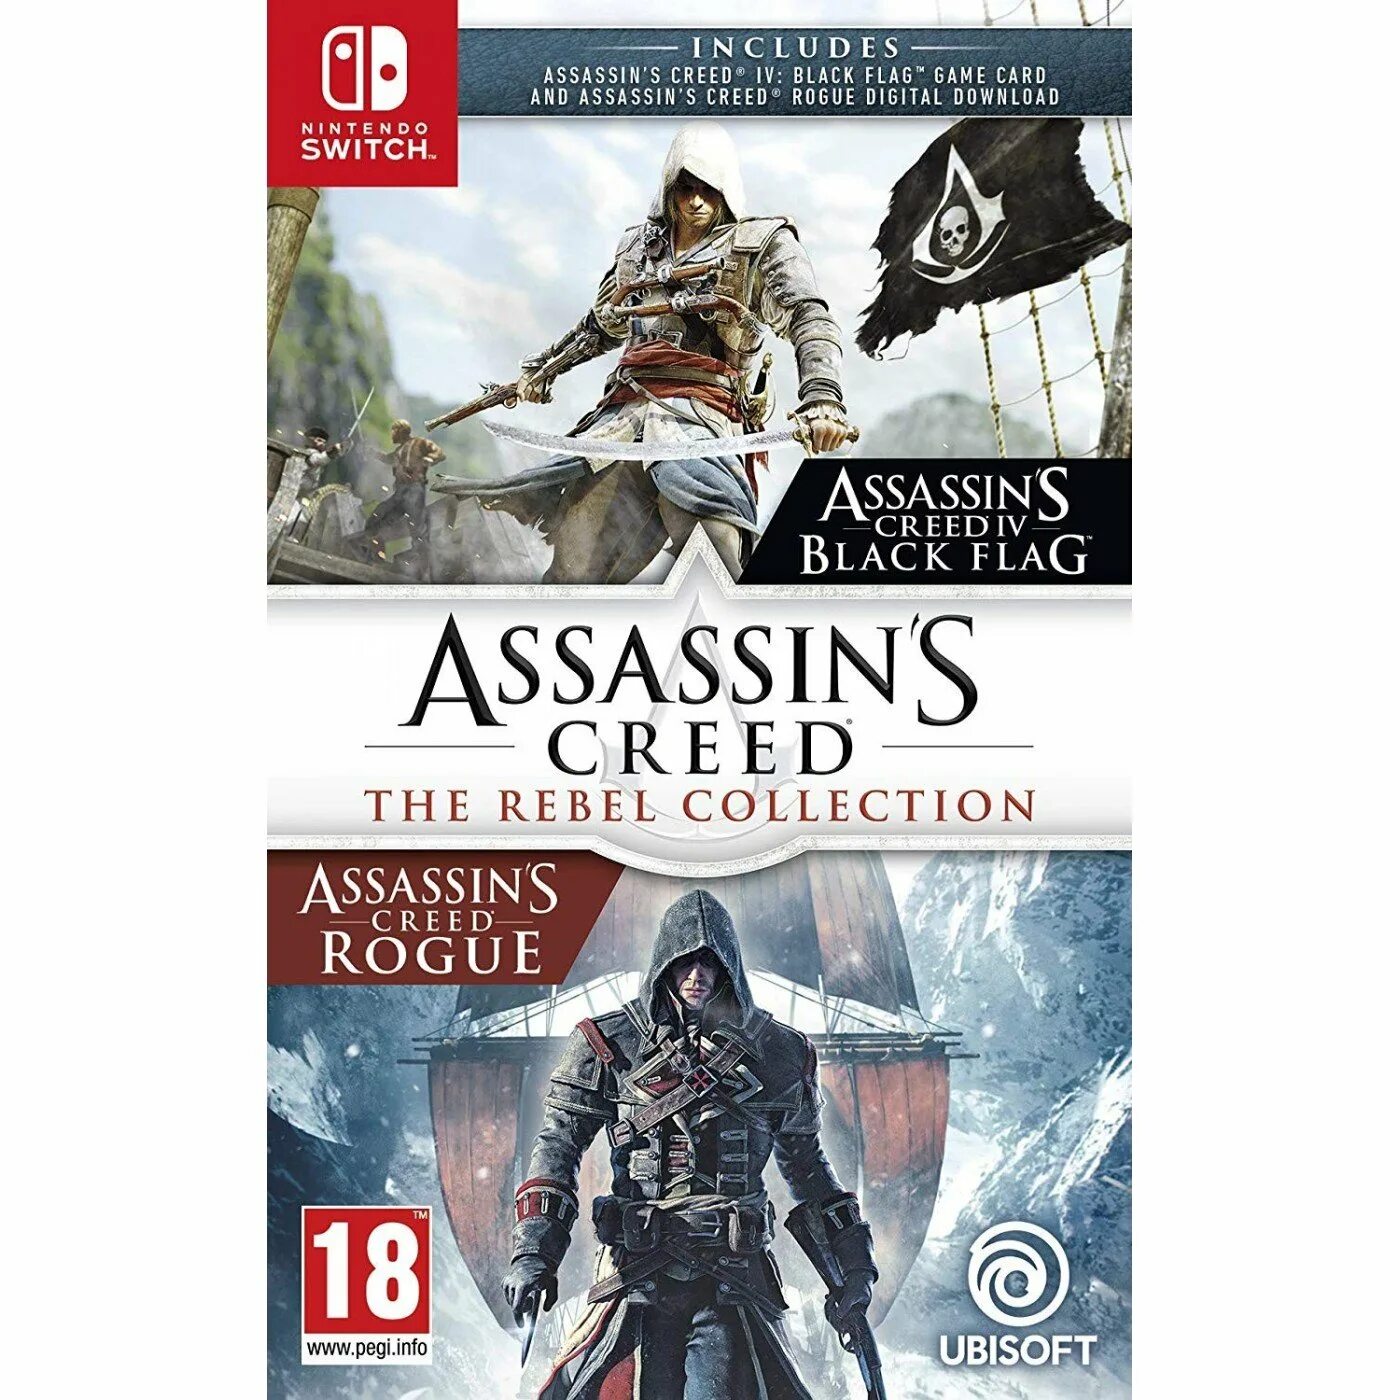 Assassins Creed мятежники коллекция Nintendo. Assassin's Creed Nintendo Switch. Ассасин Крид мятежники Нинтендо свитч. Assassins Creed 3 обновленная версия свич. Ассасин крид на нинтендо